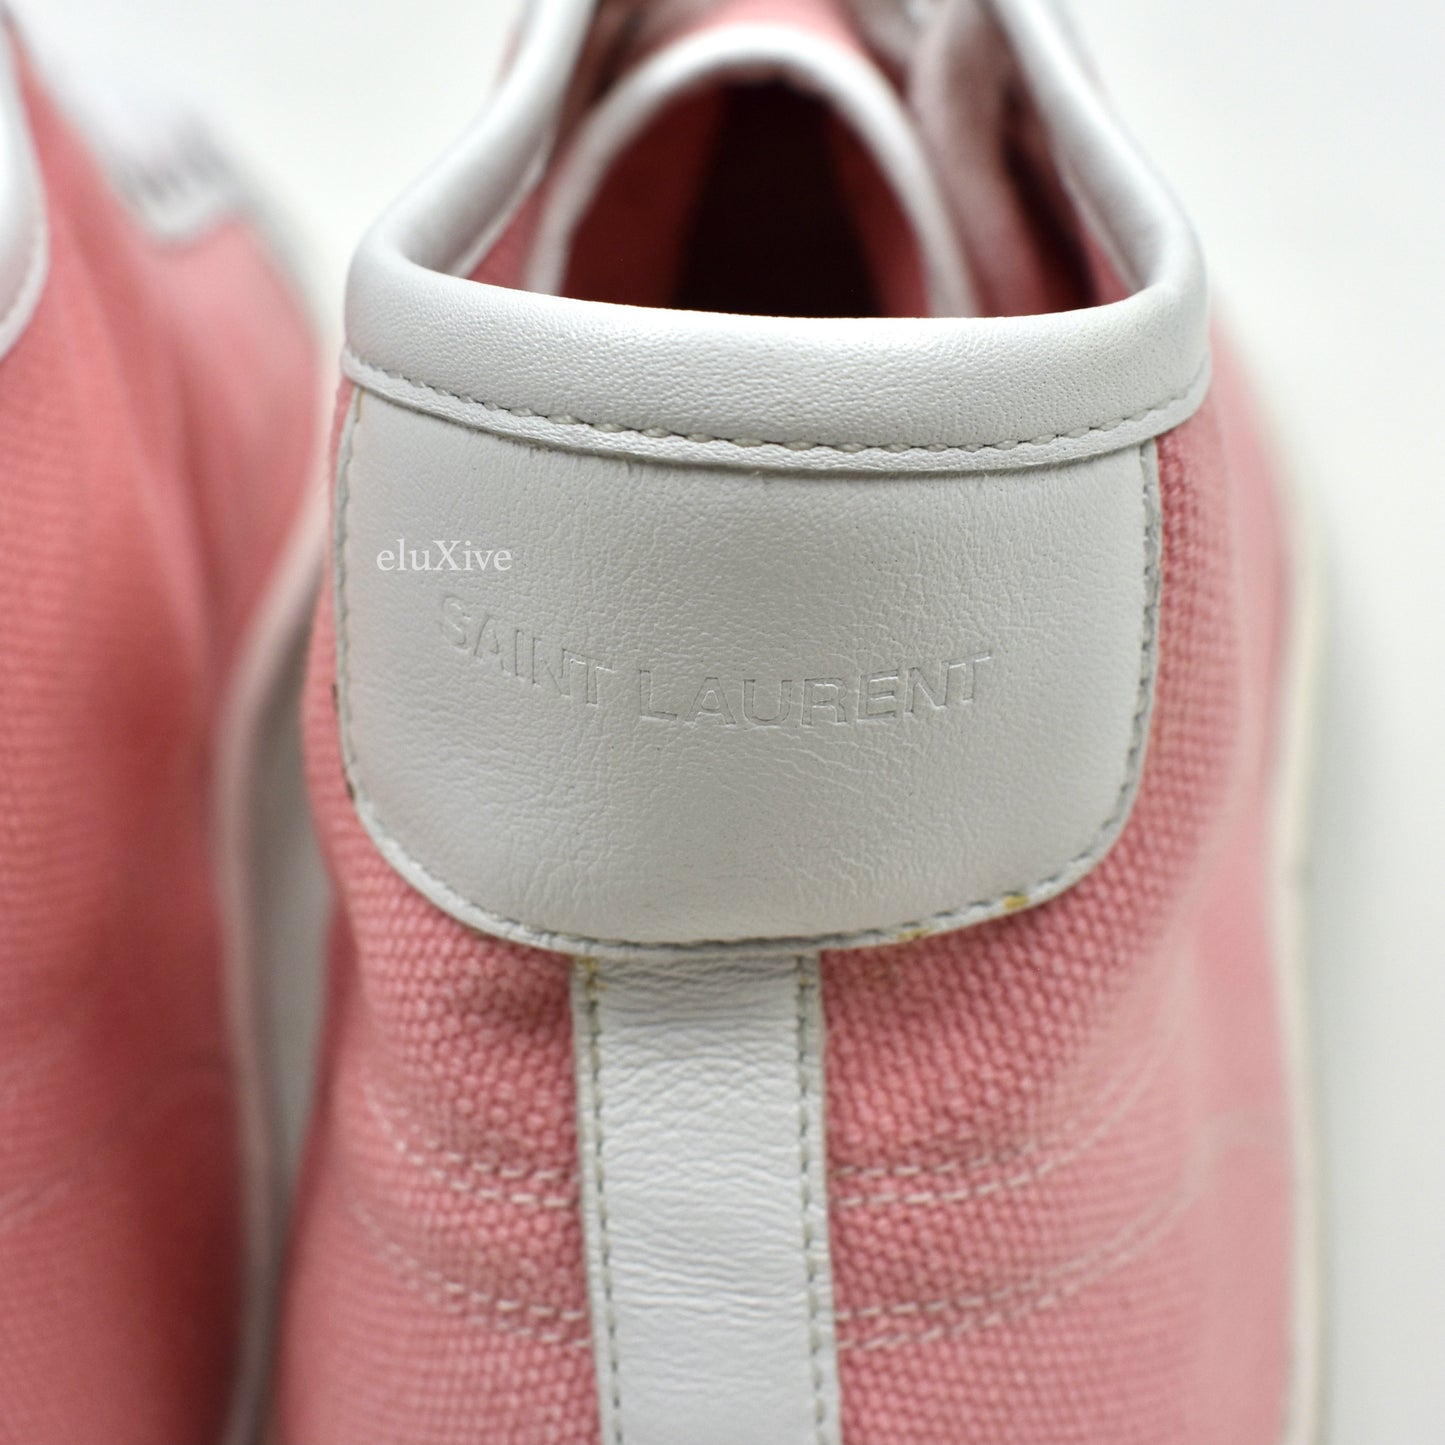 Saint Laurent - Pink Canvas SL 39 Mid Top Sneakers